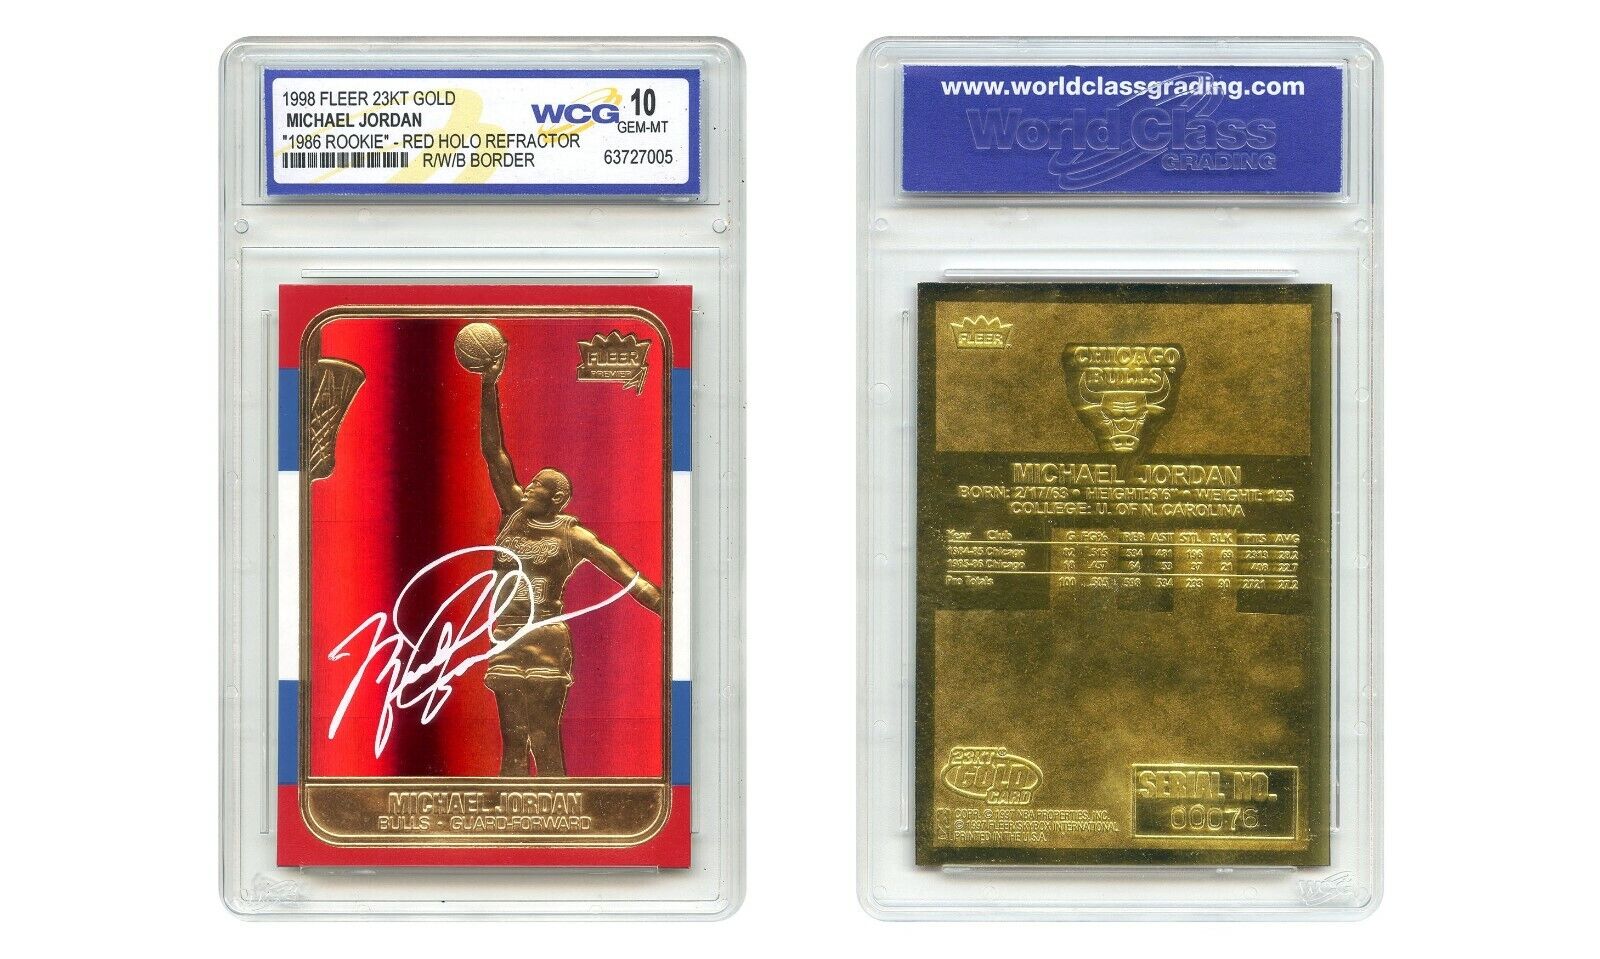 MICHAEL JORDAN 1998 FLEER 23K Gold Card RED PRIZM Rookie Design Refractor GM 10